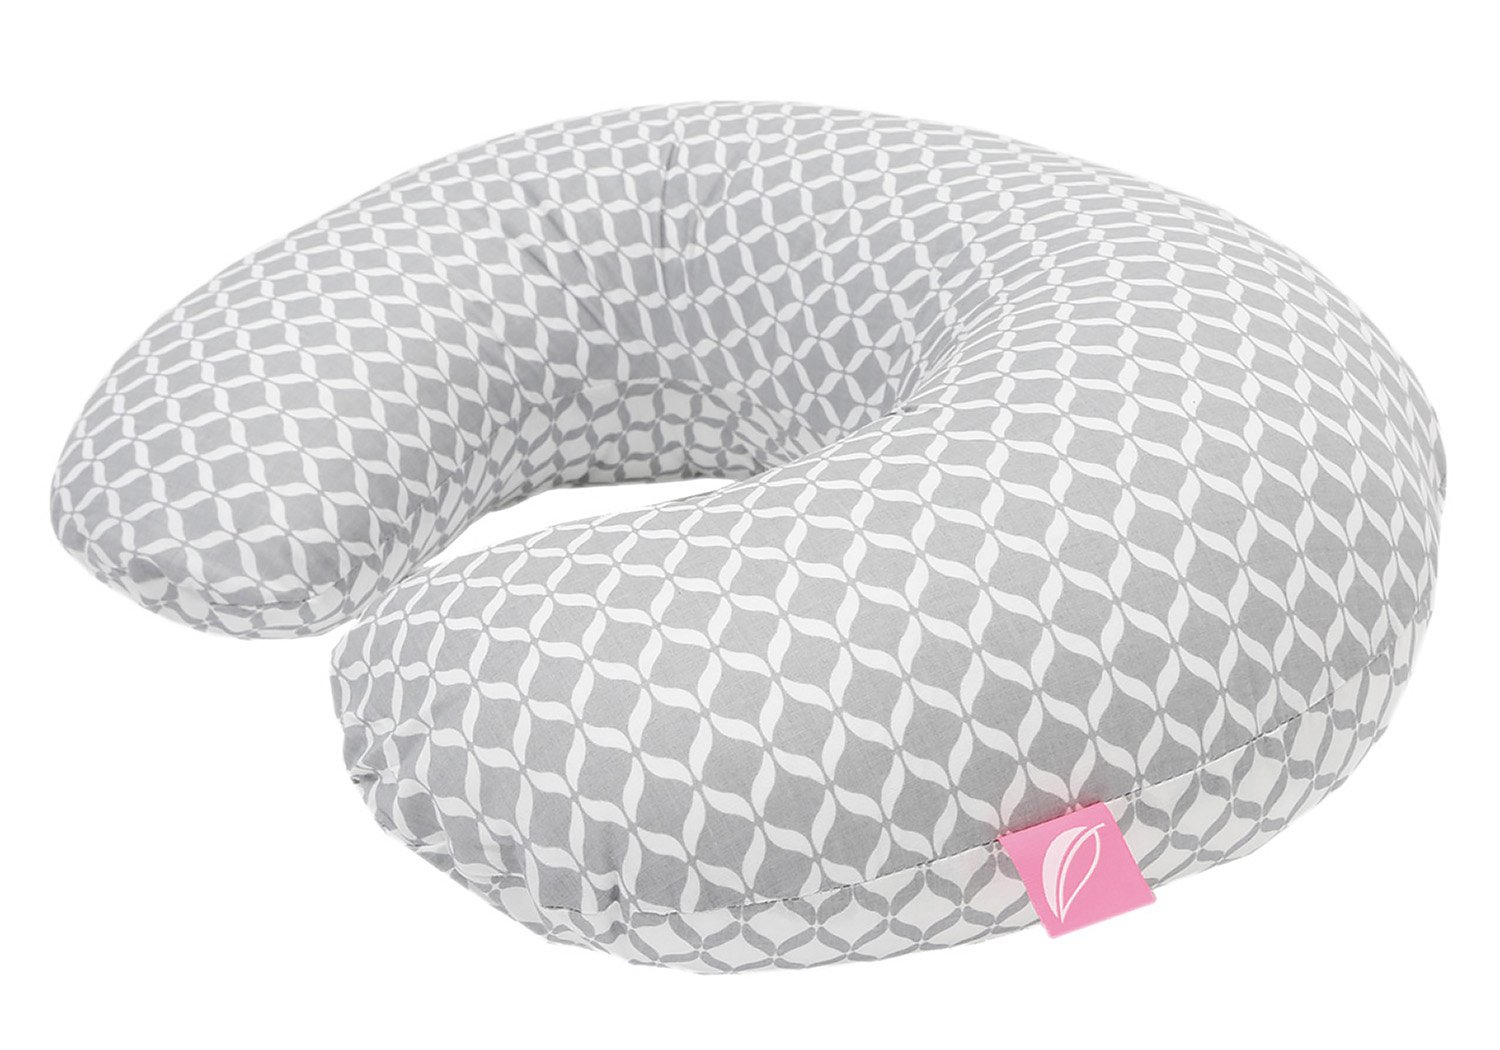 Motherhood Ergonomic Breastfeeding Pillow, STANDARD 100 by OEKO-TEX® Certified